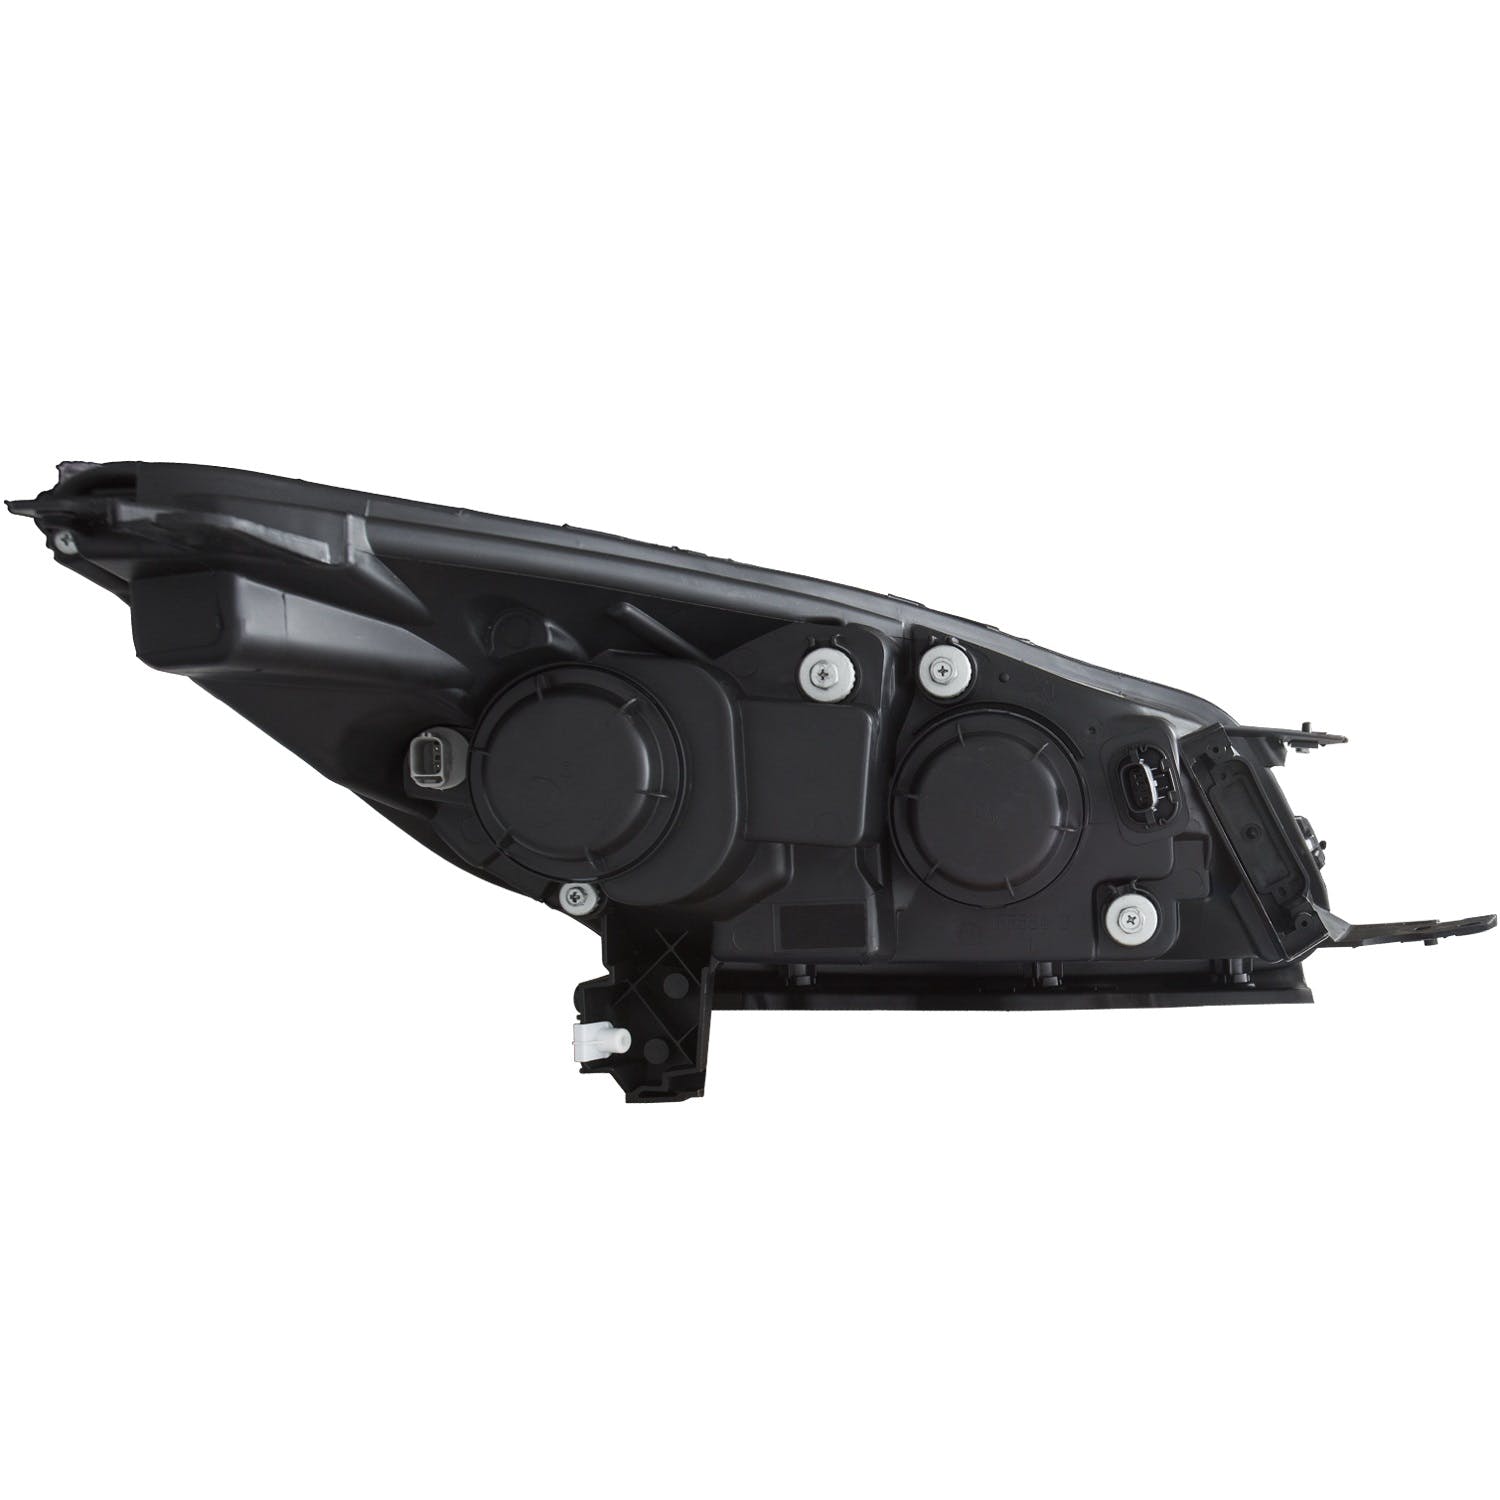 AnzoUSA 111325 Projector Headlights with U-Bar Chrome